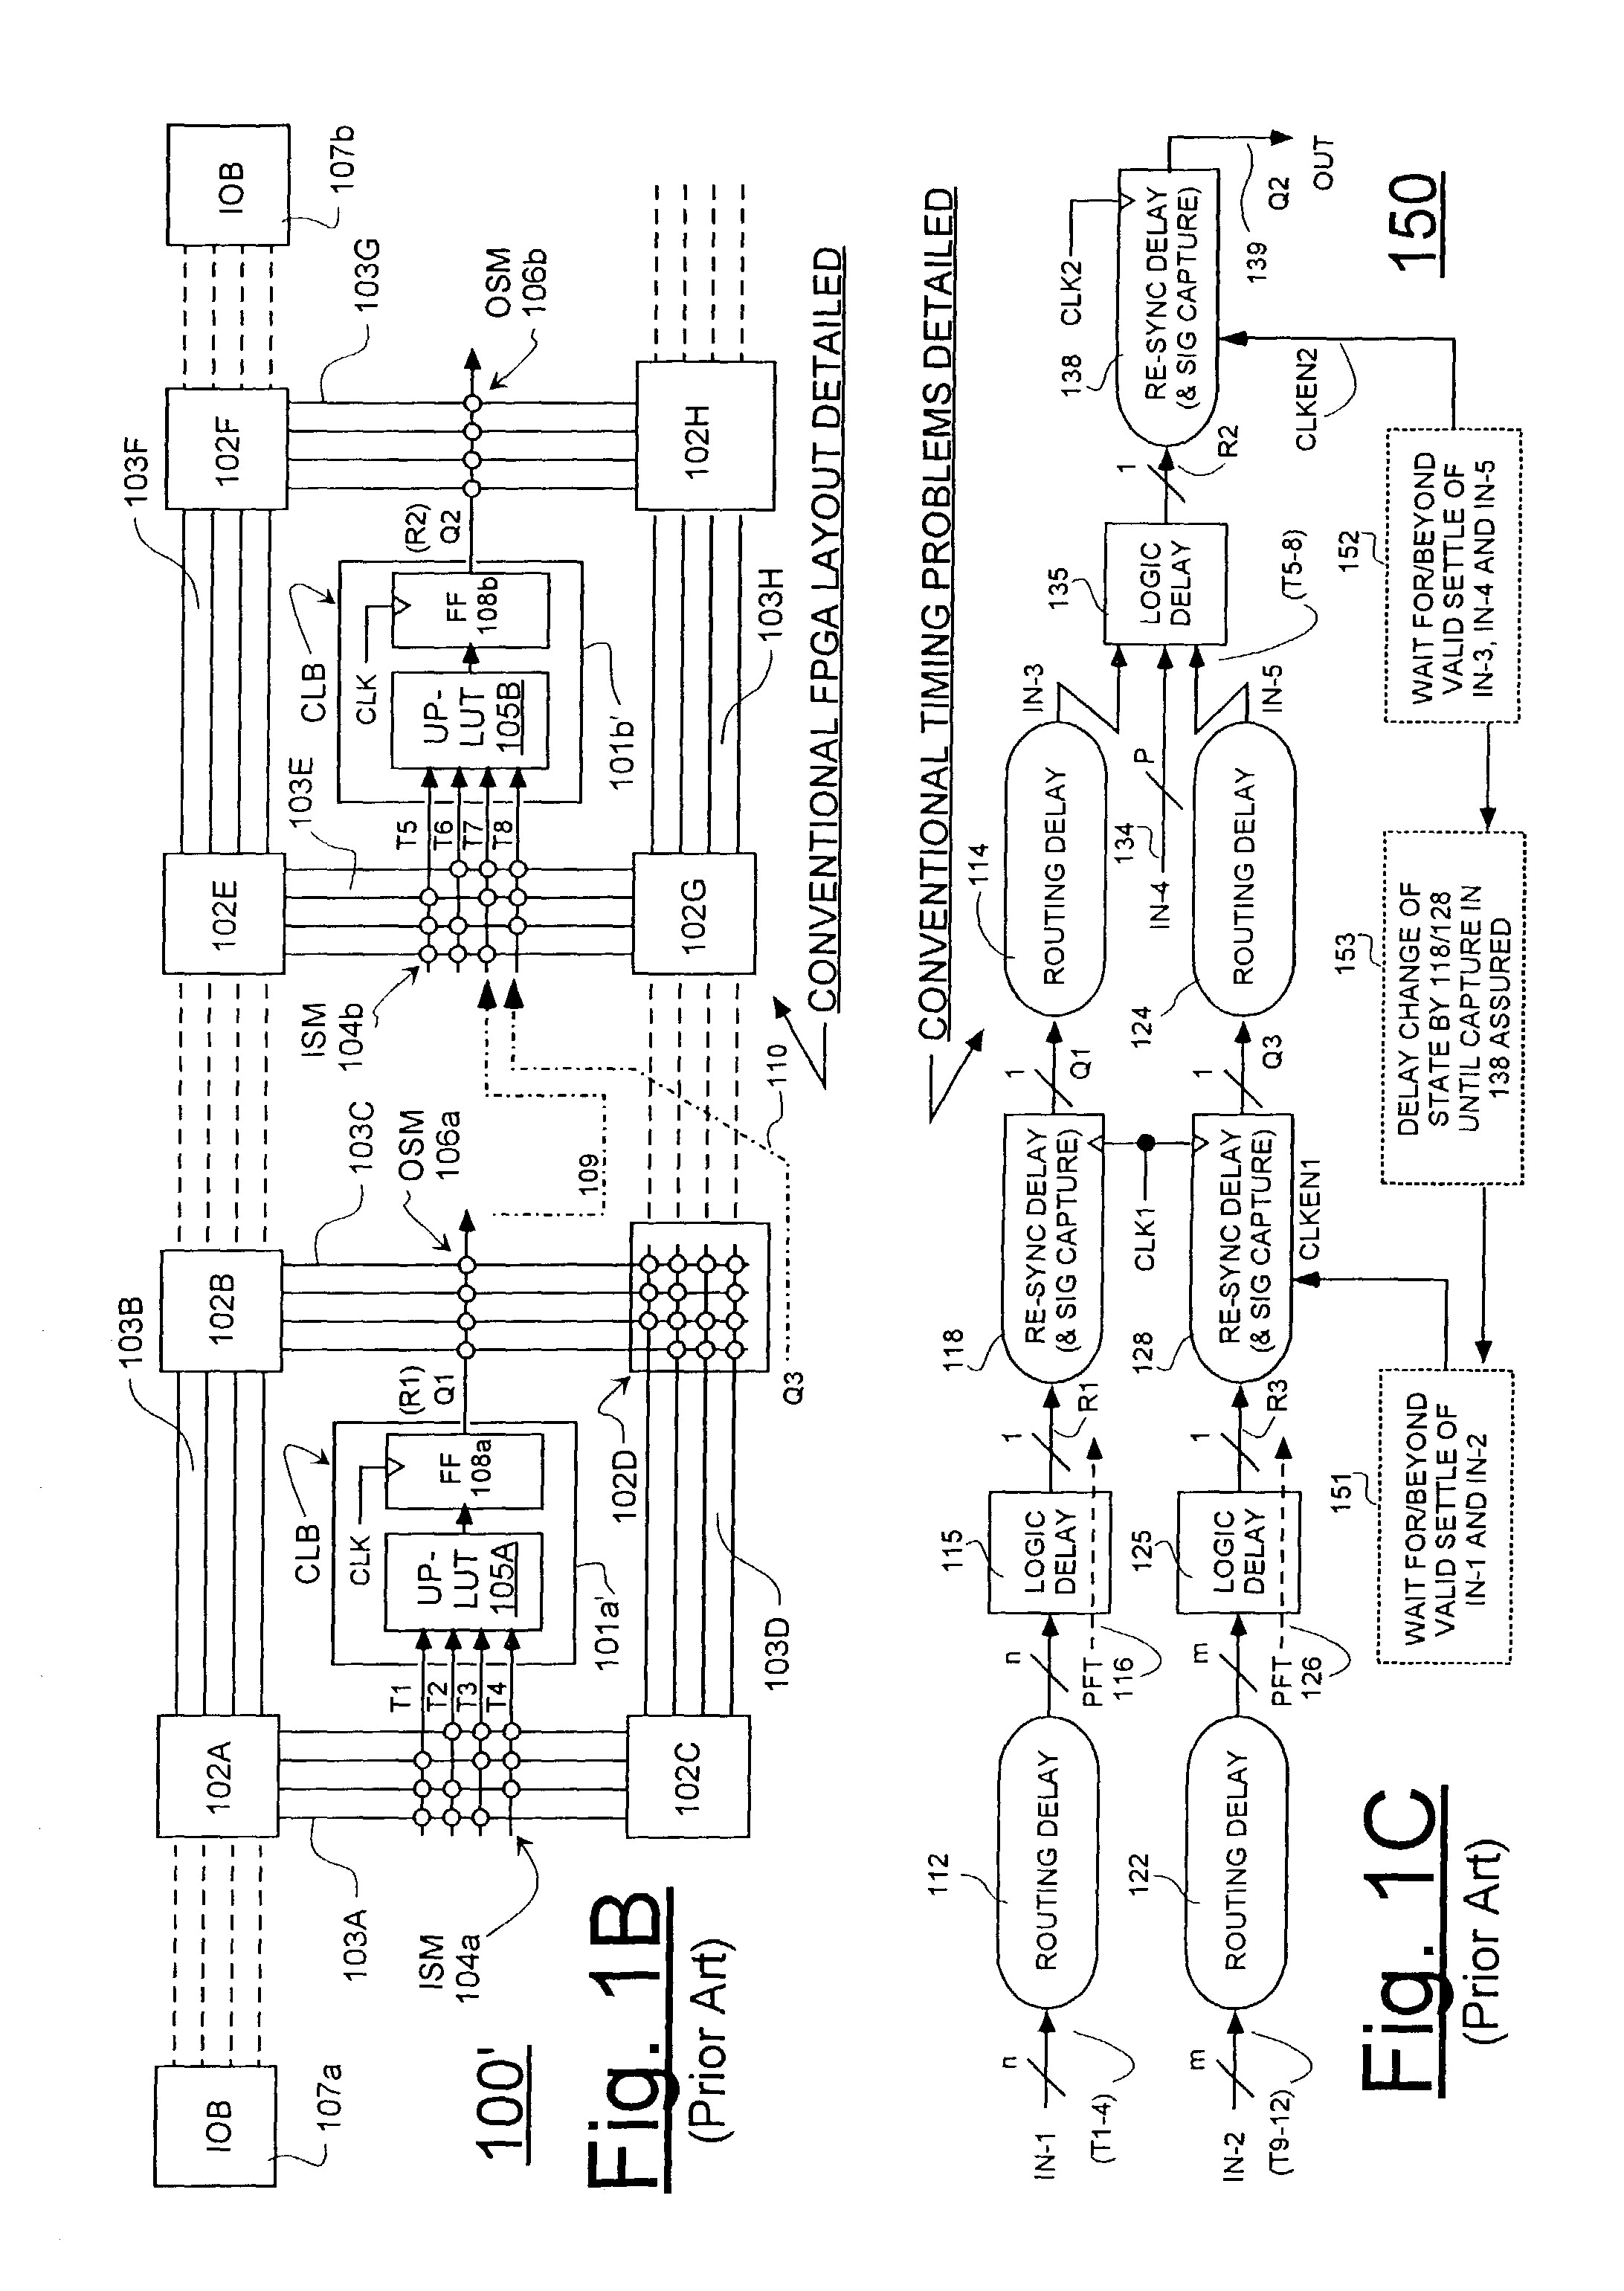 FPGA with register-intensive architecture